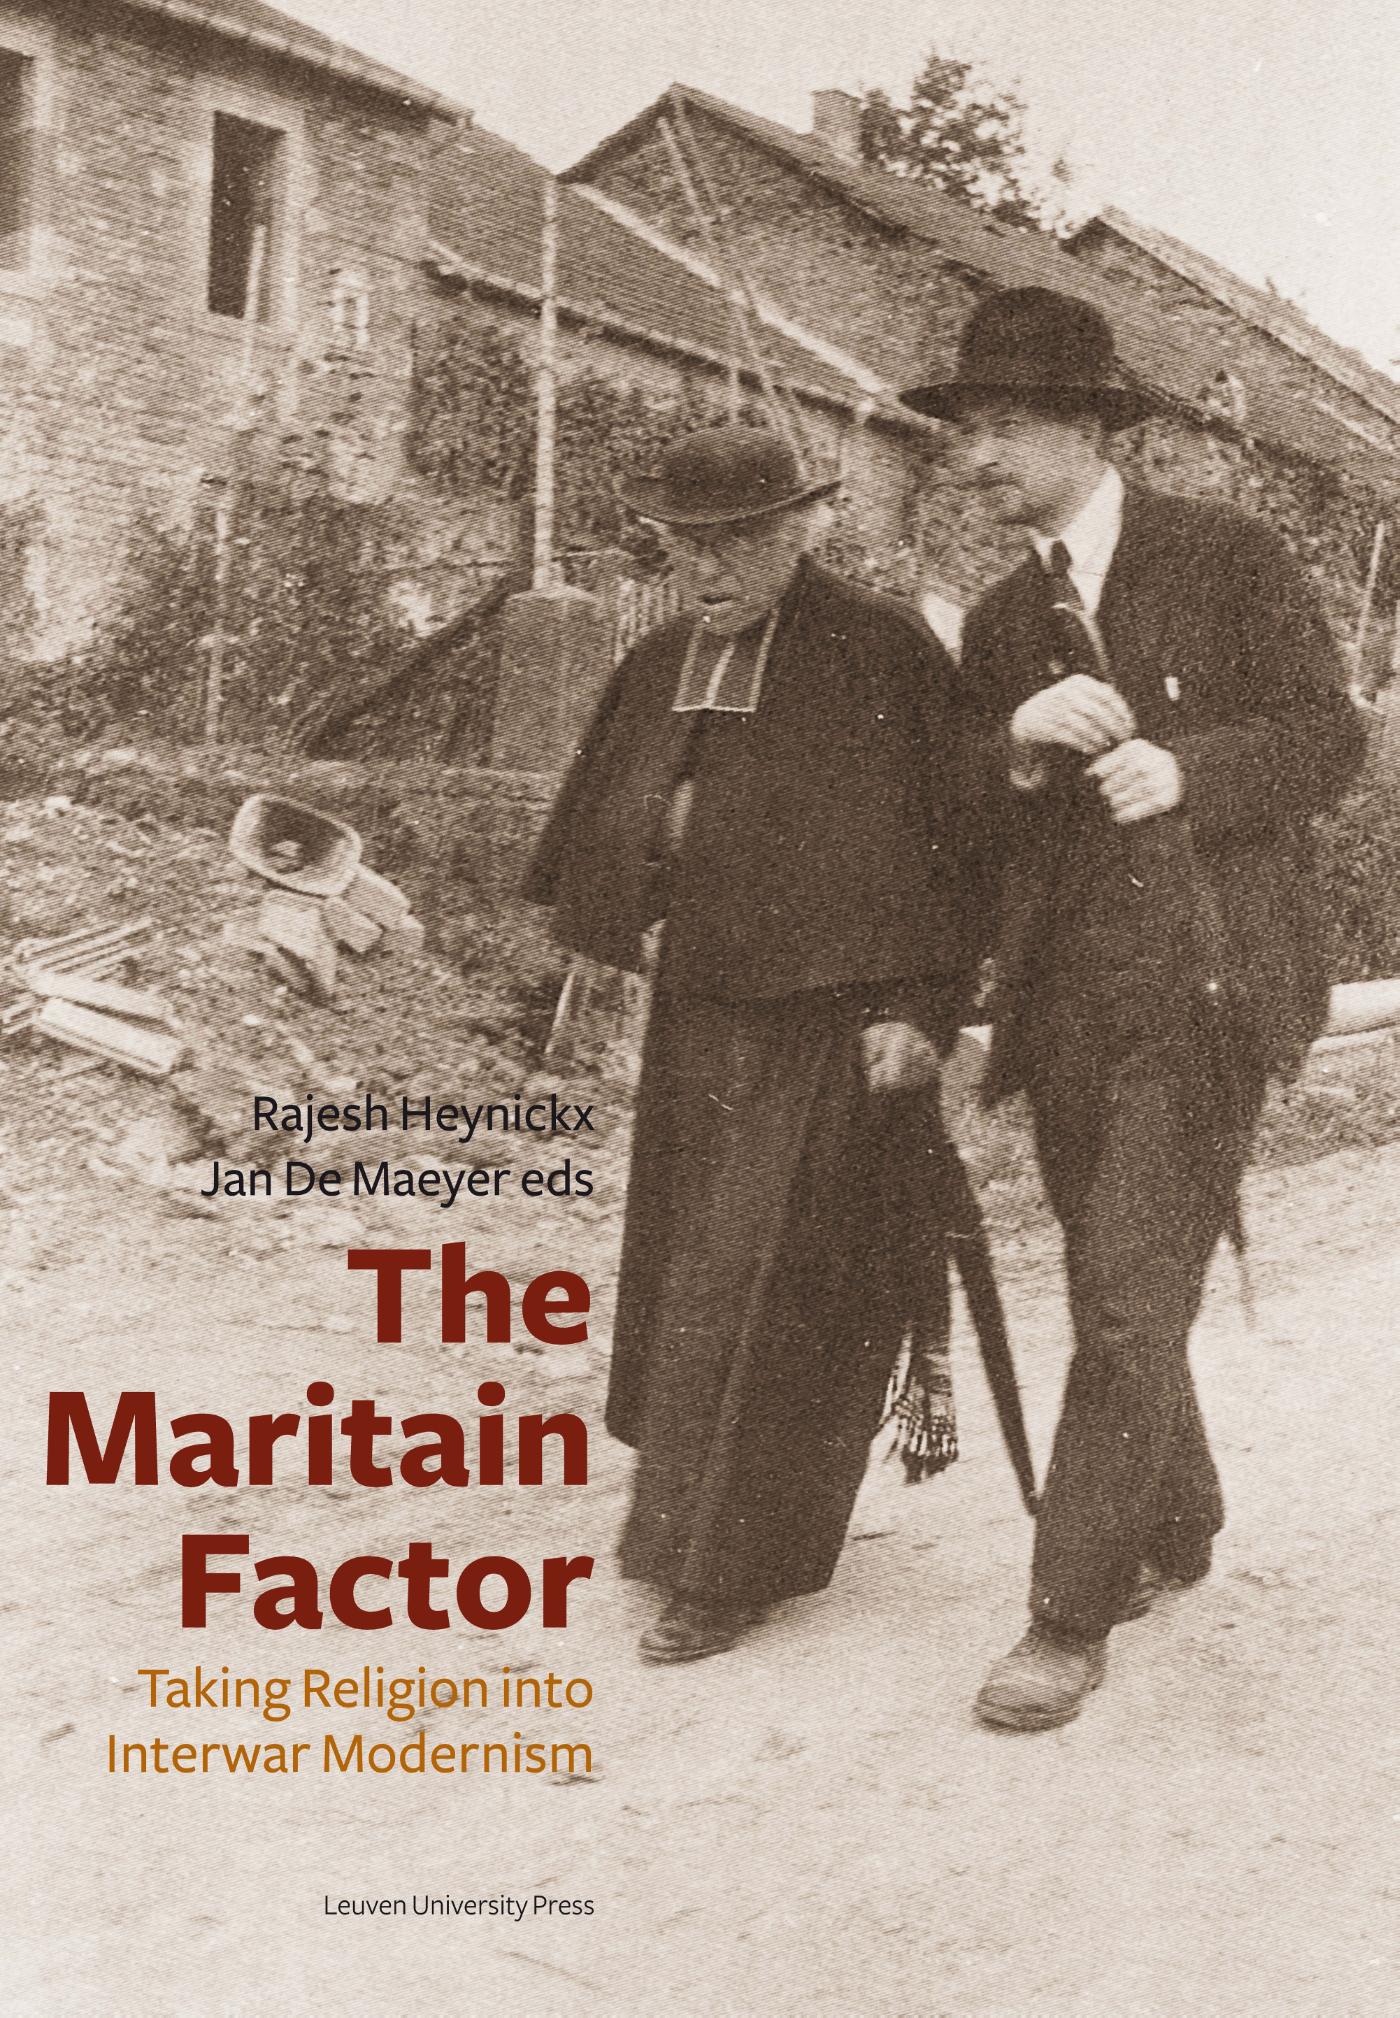 The maritain factor (Ebook)